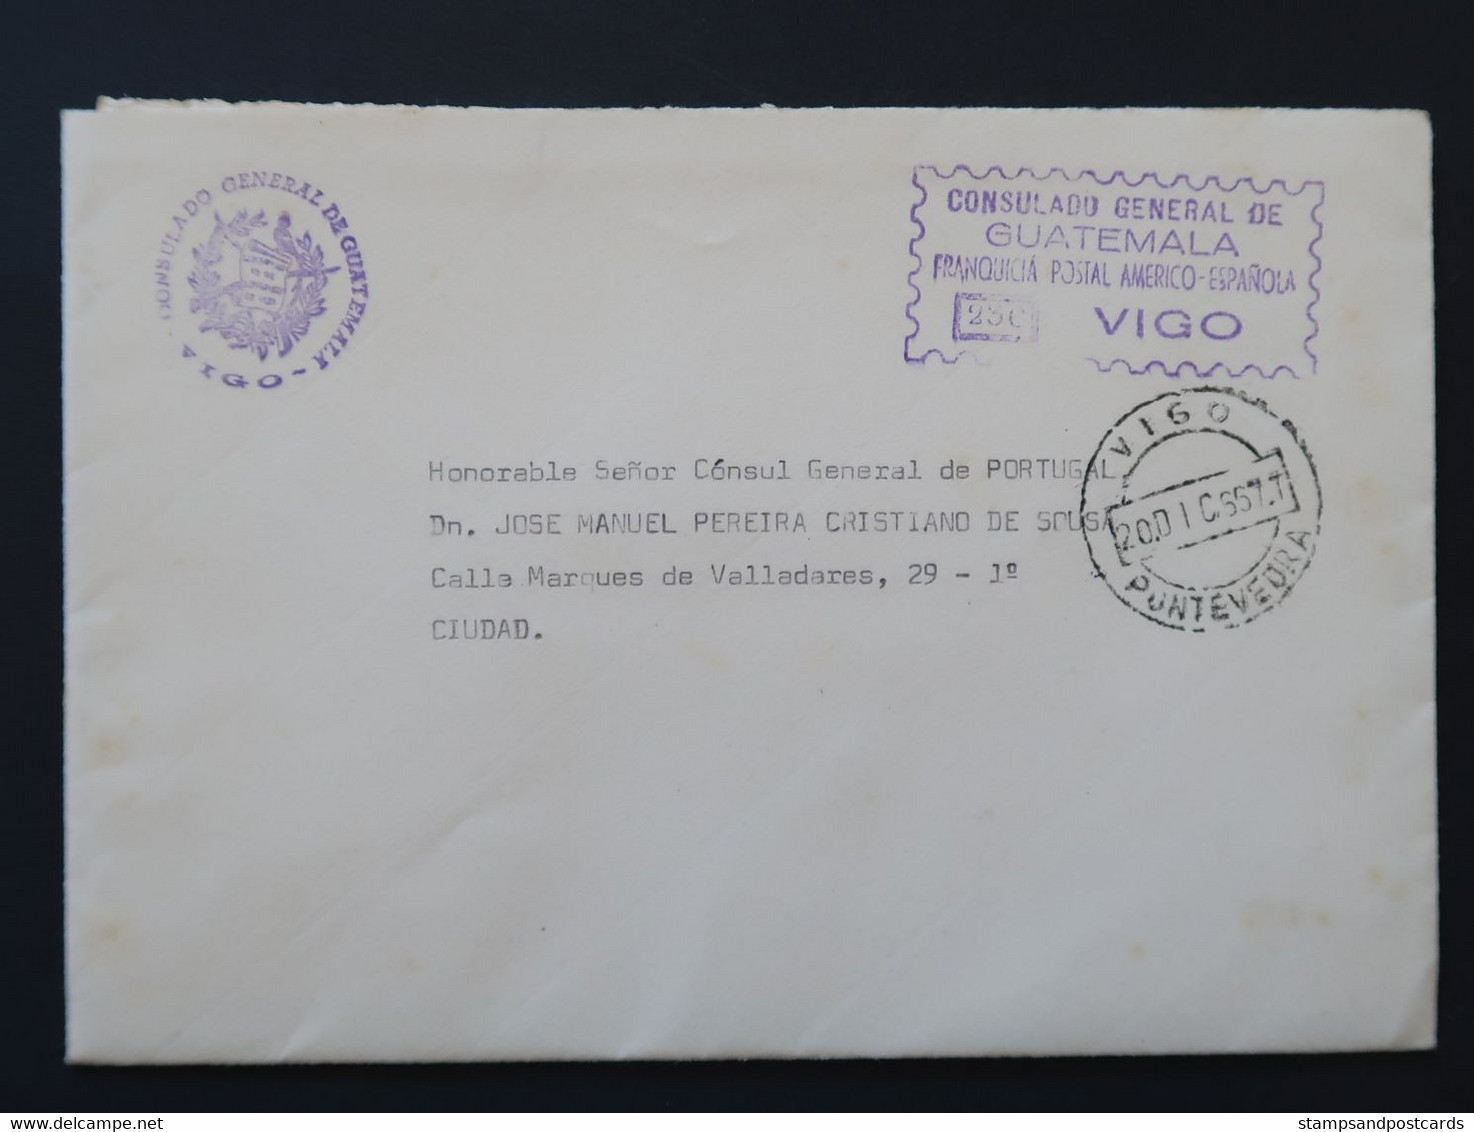 Espagne 1966 Lettre Franchise Postal Vigo Consulat Guatemala España Franquicia Consulado Official Paid Spain - Franchise Postale